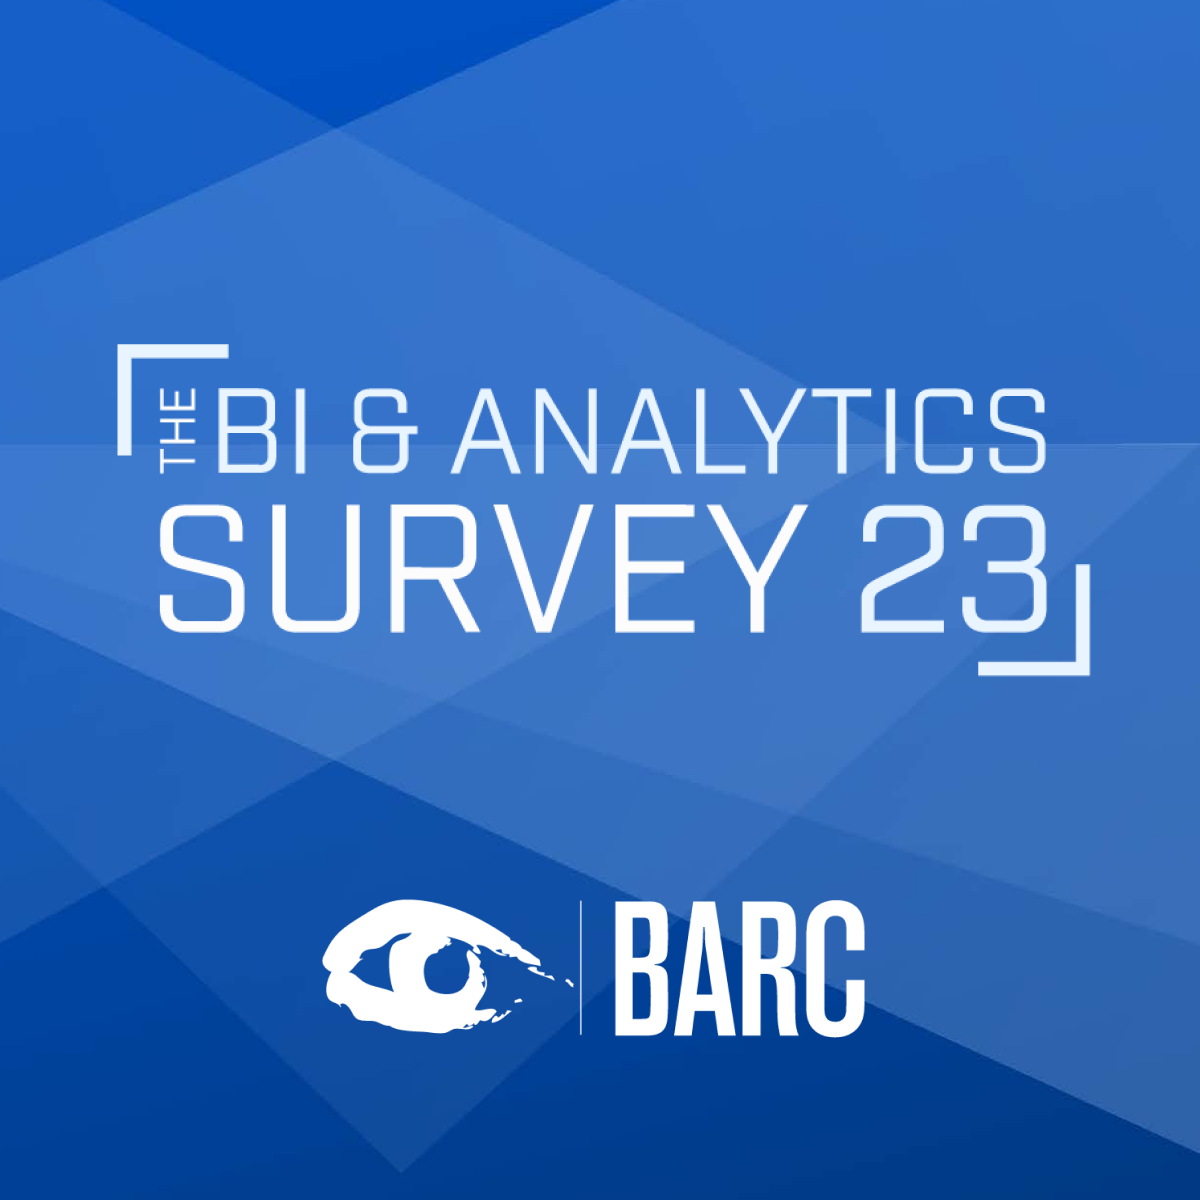 TARGIT Leads in Global BI & Analytics Survey